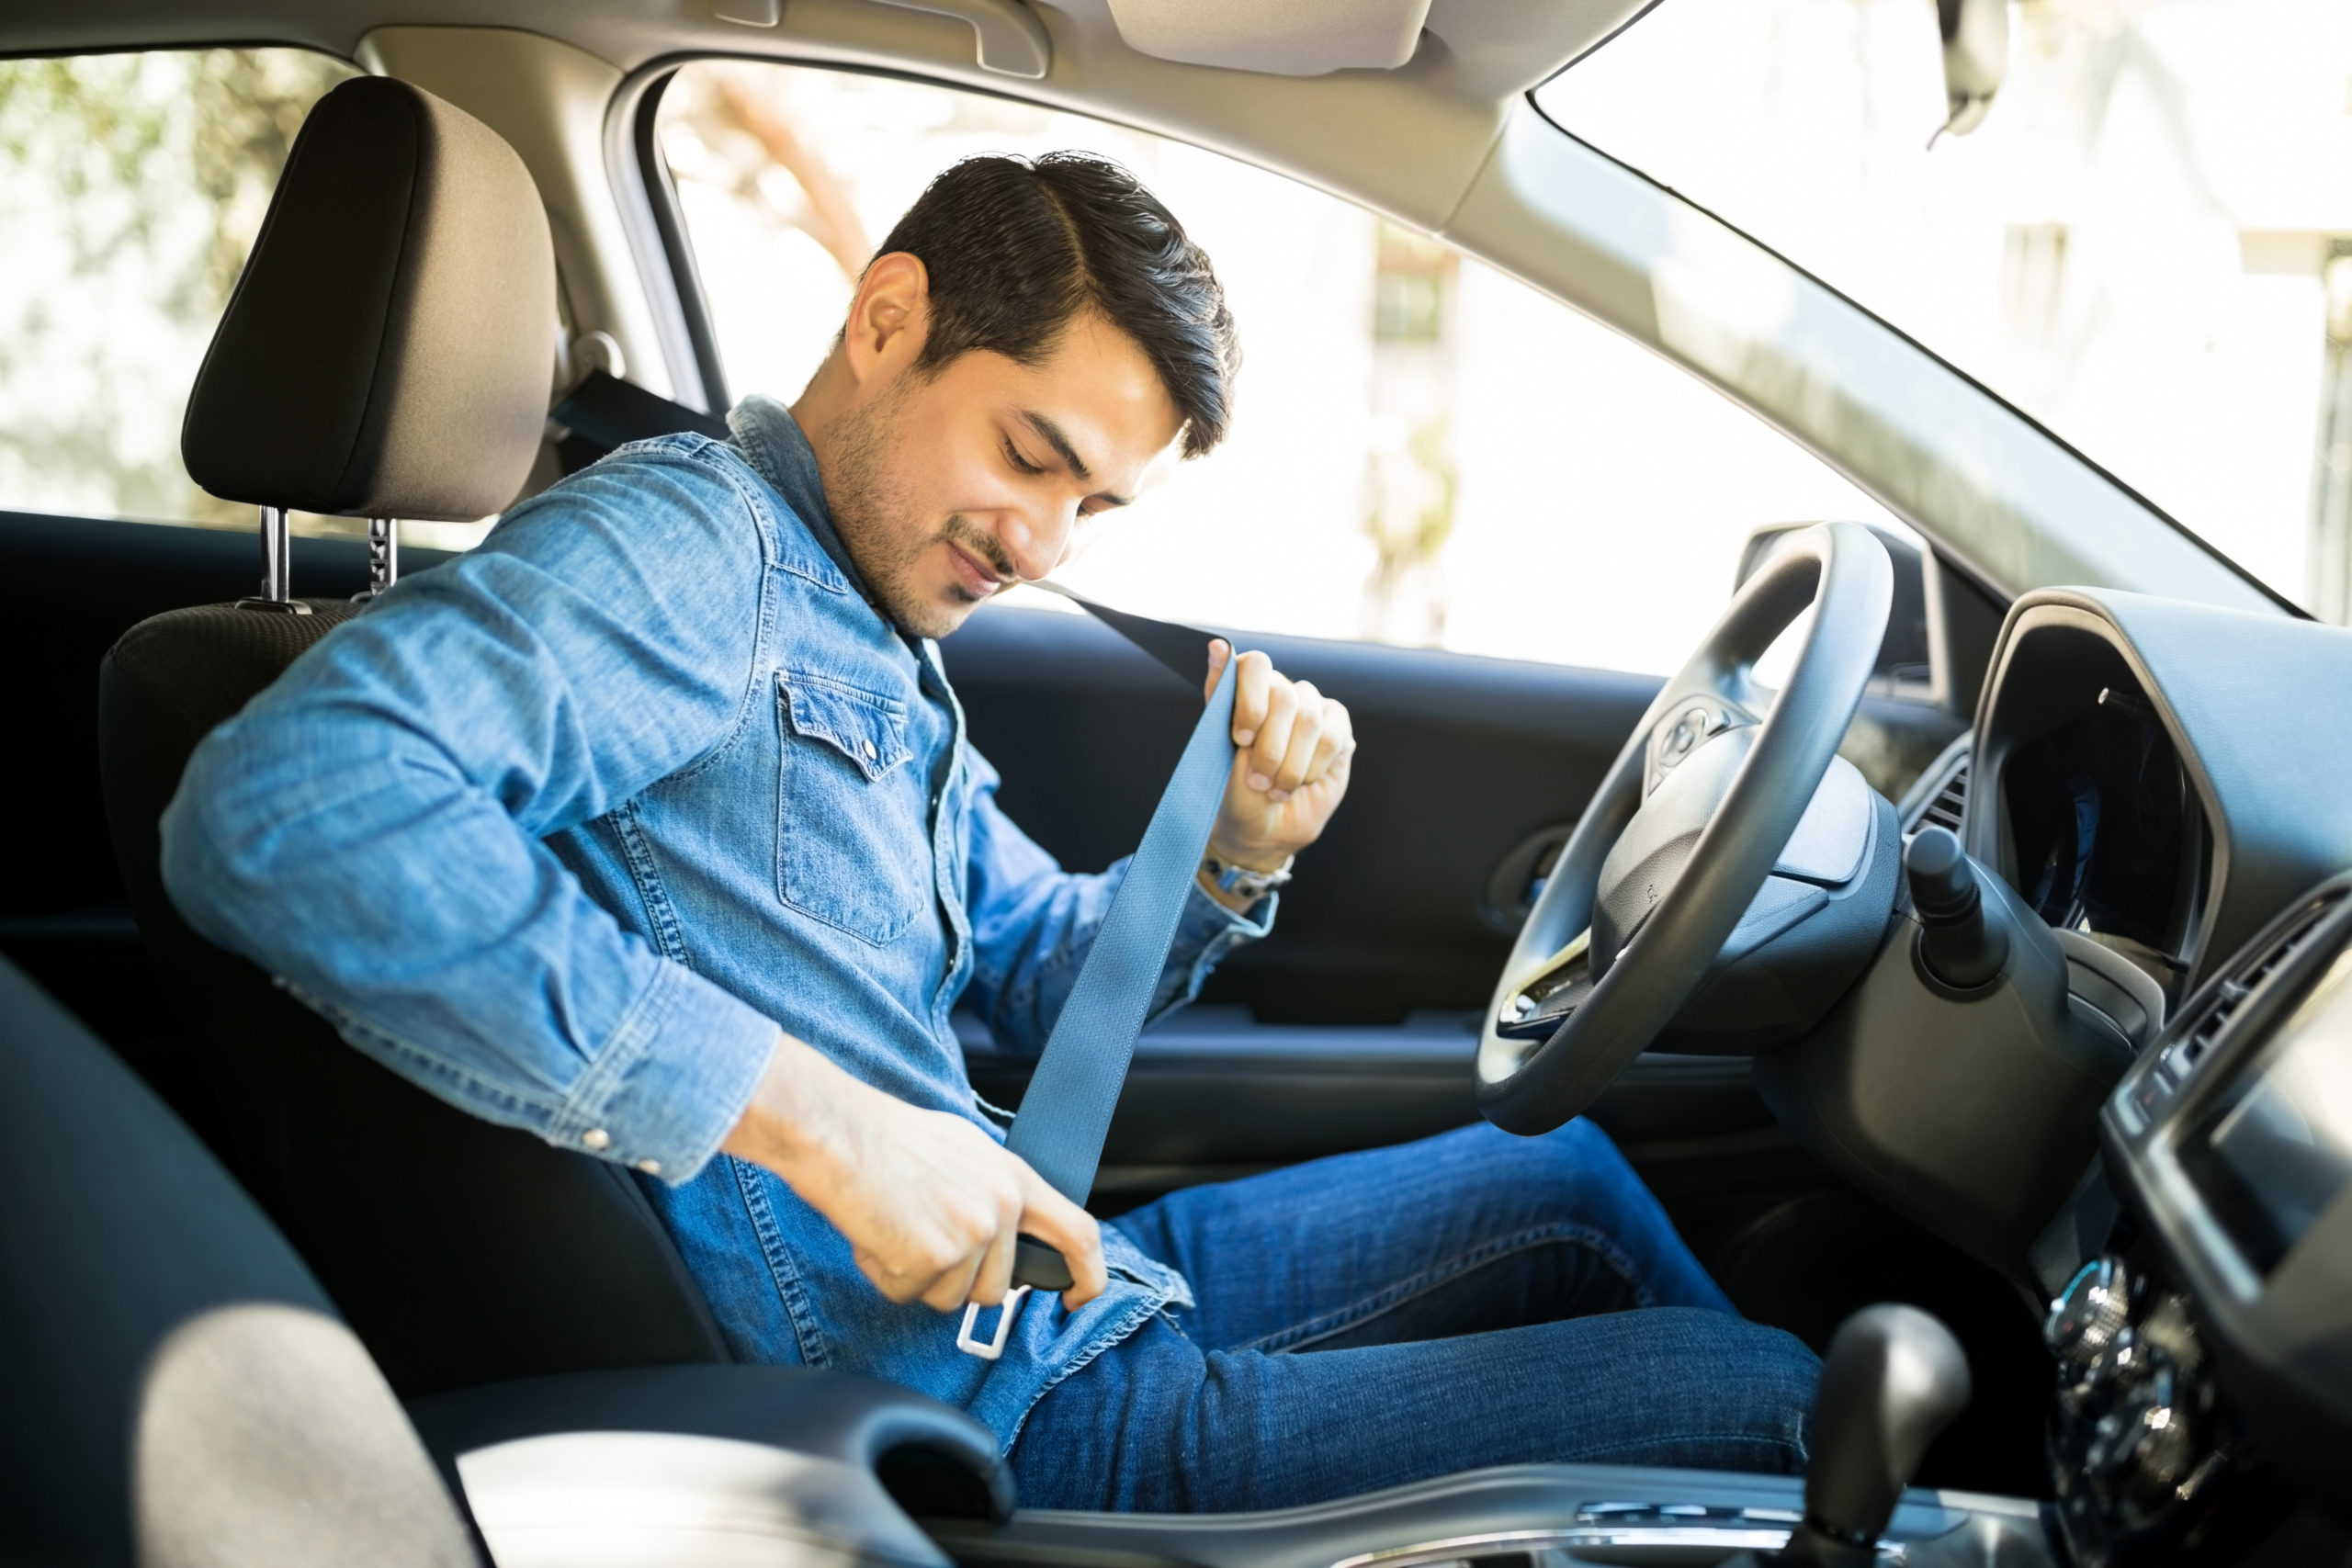 seatbelt affect Car Accident Claim, Car Accident Claim